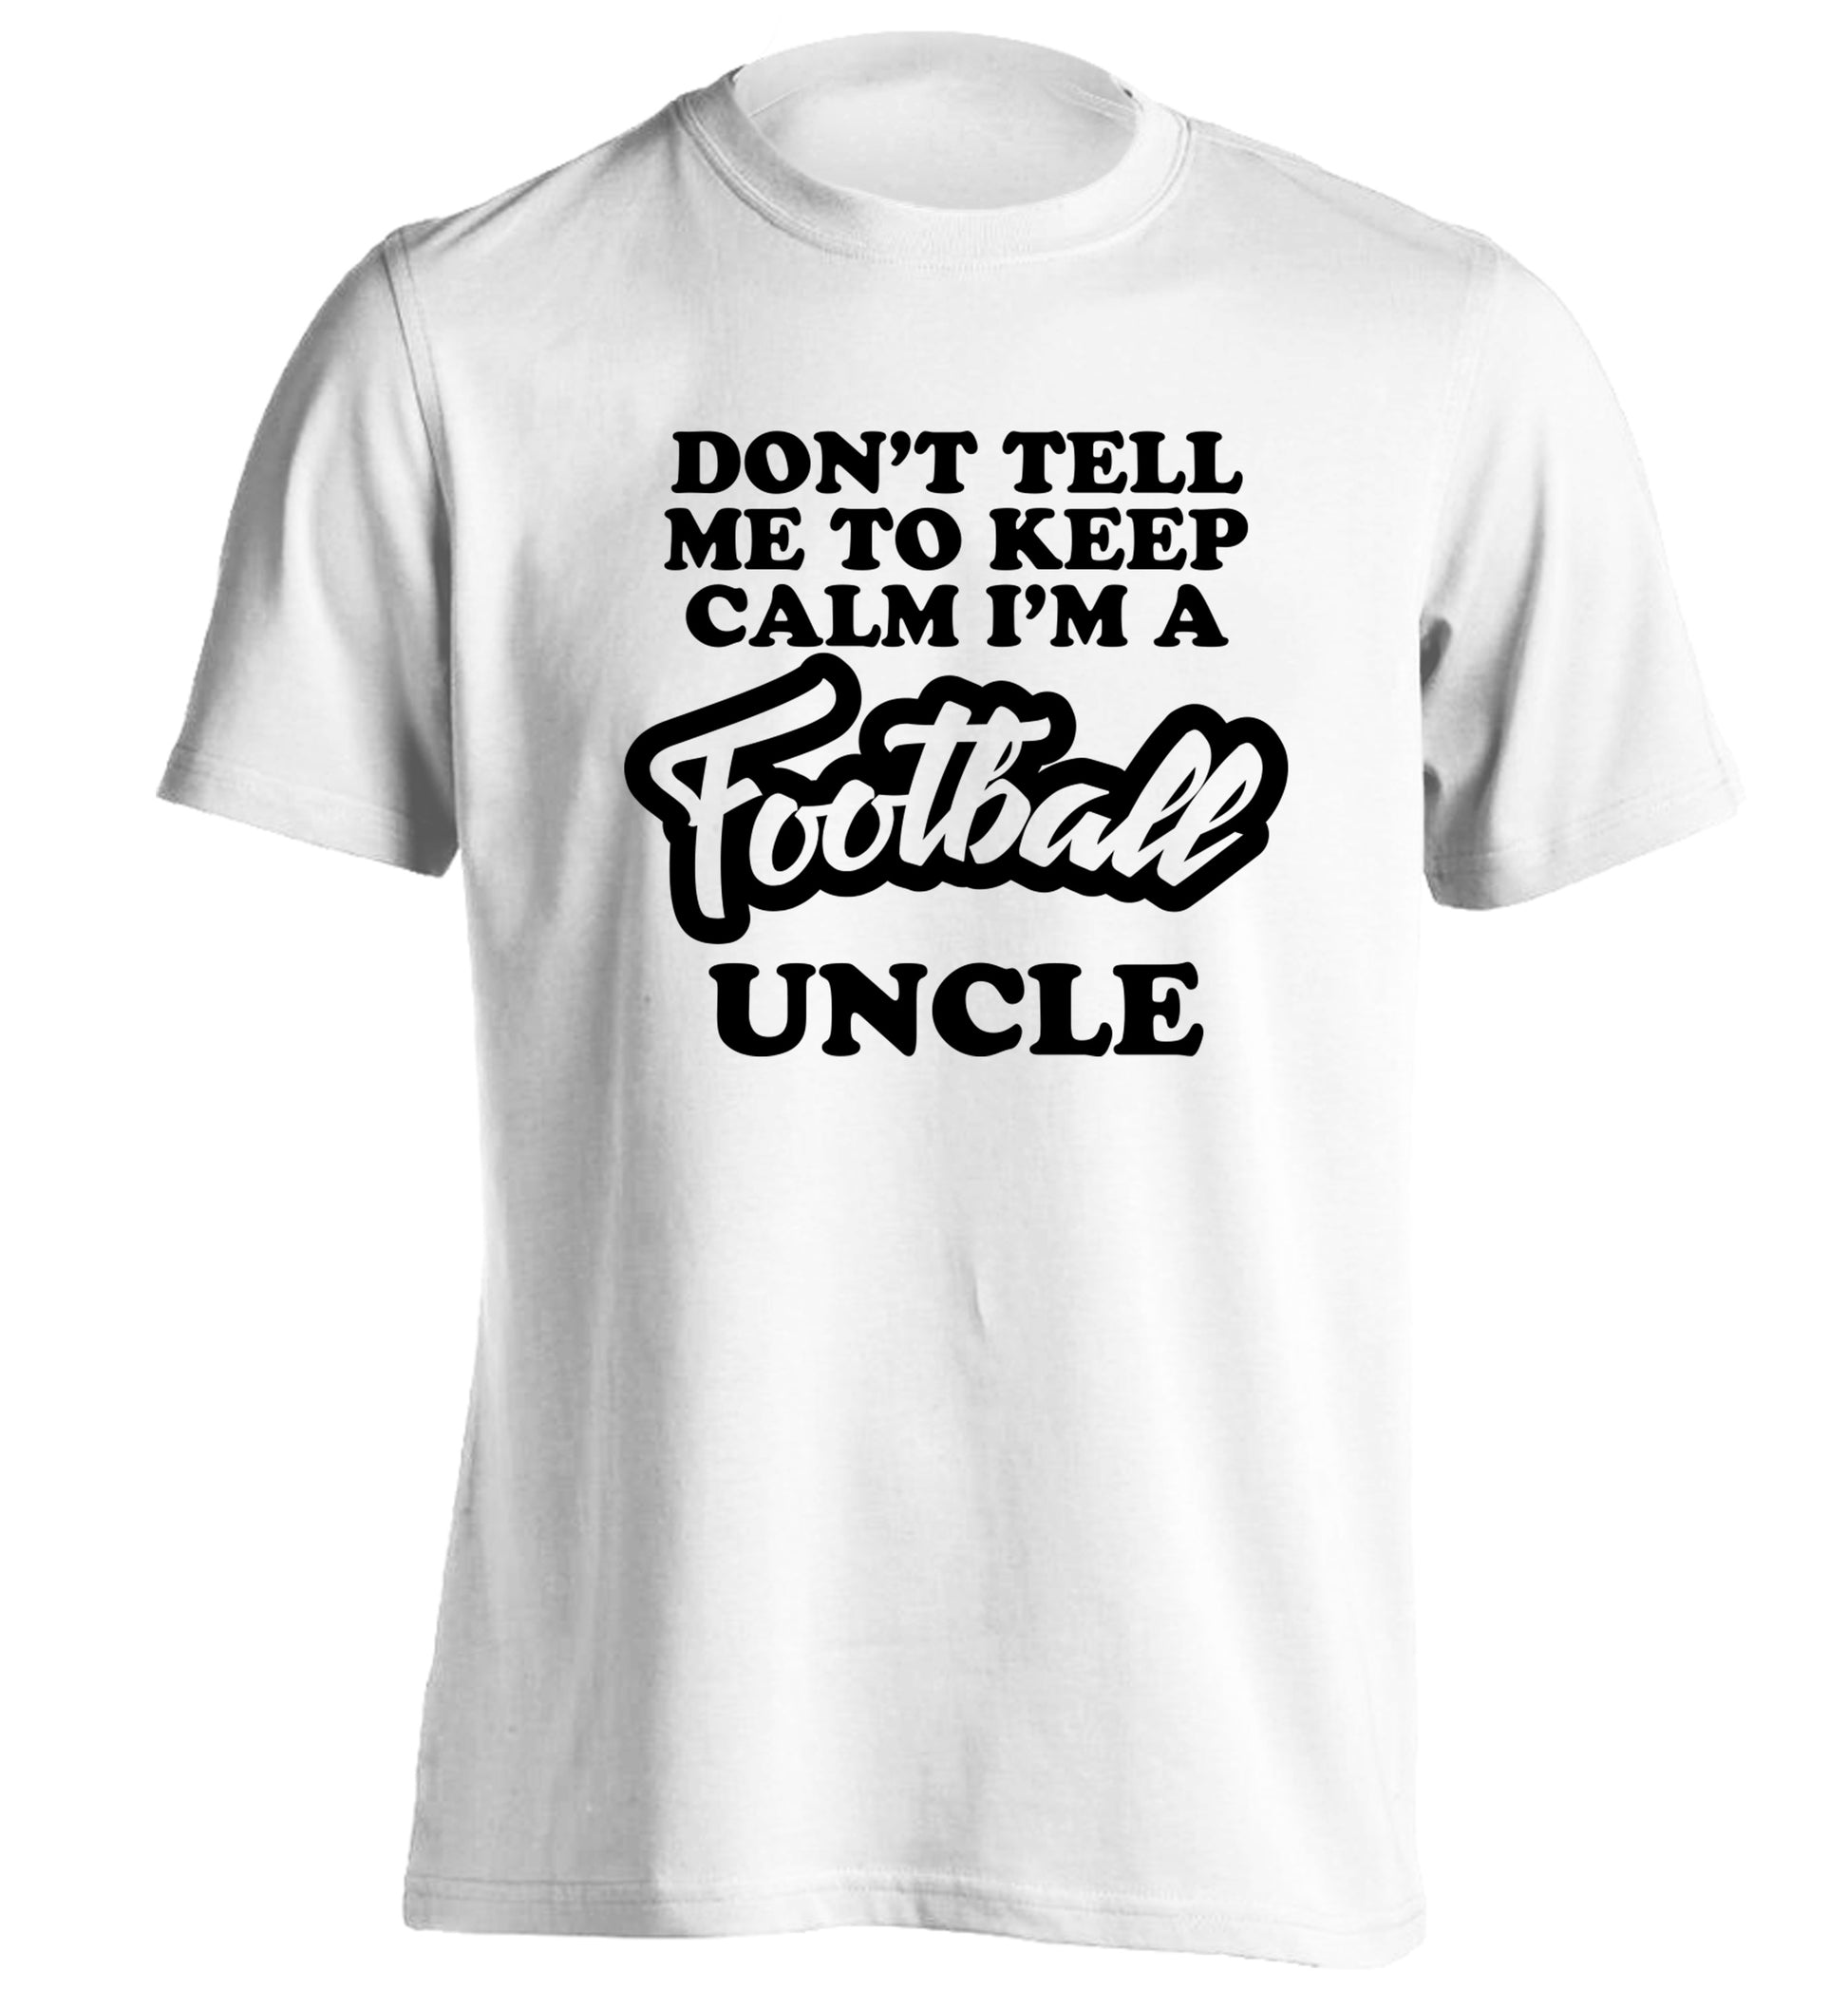 Worlds most amazing football uncle adults unisexwhite Tshirt 2XL